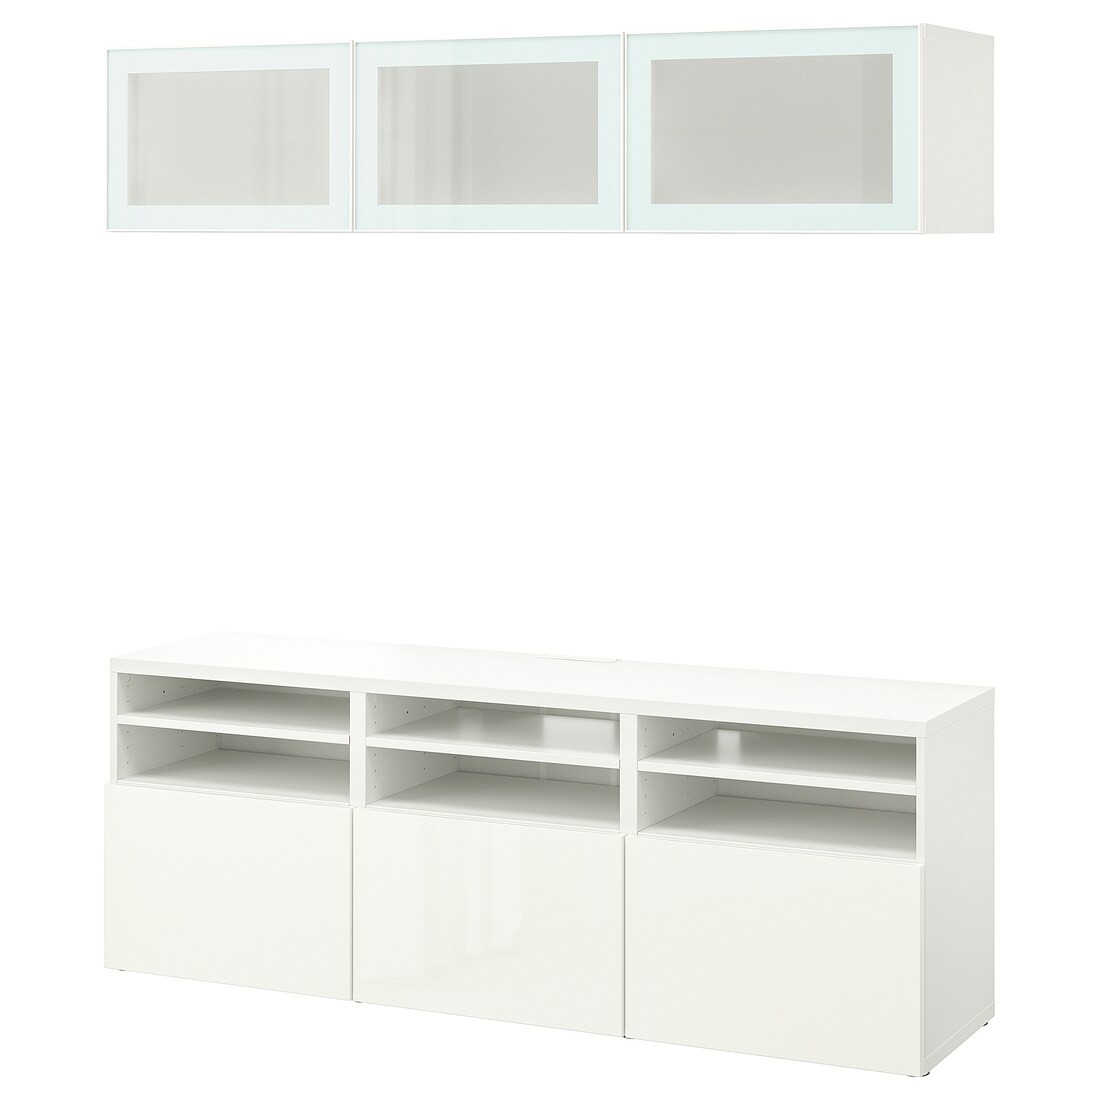 IKEA BESTÅ БЕСТО Комбінація для ТВ / скляні двері, біле / Selsviken глянцеве біле матове скло, 180x42x192 см 09488789 094.887.89